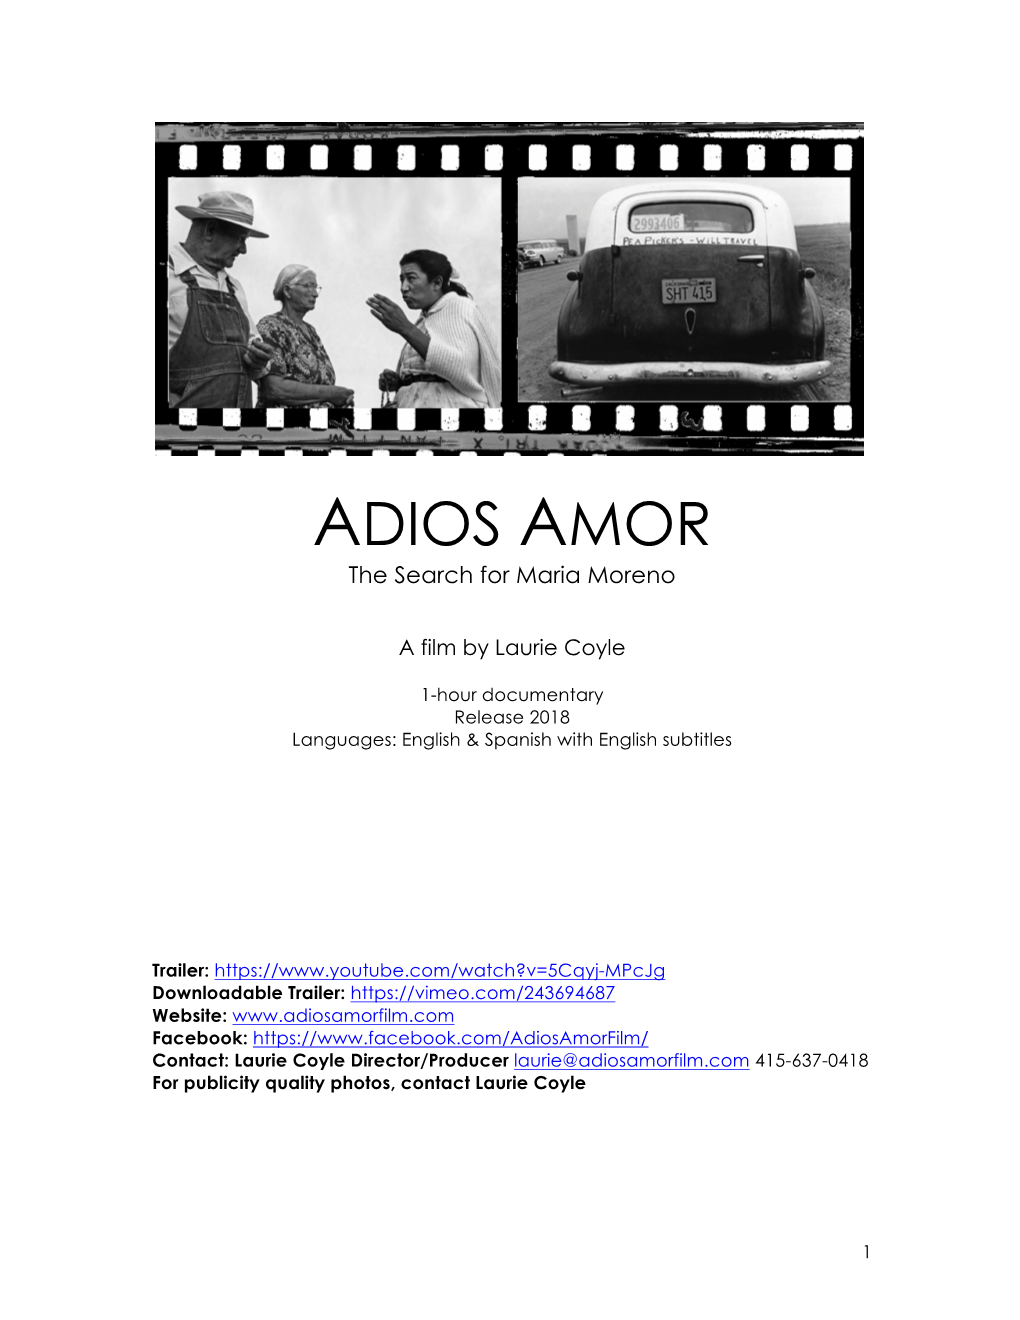 PRESSKIT (Updated) Adios Amor